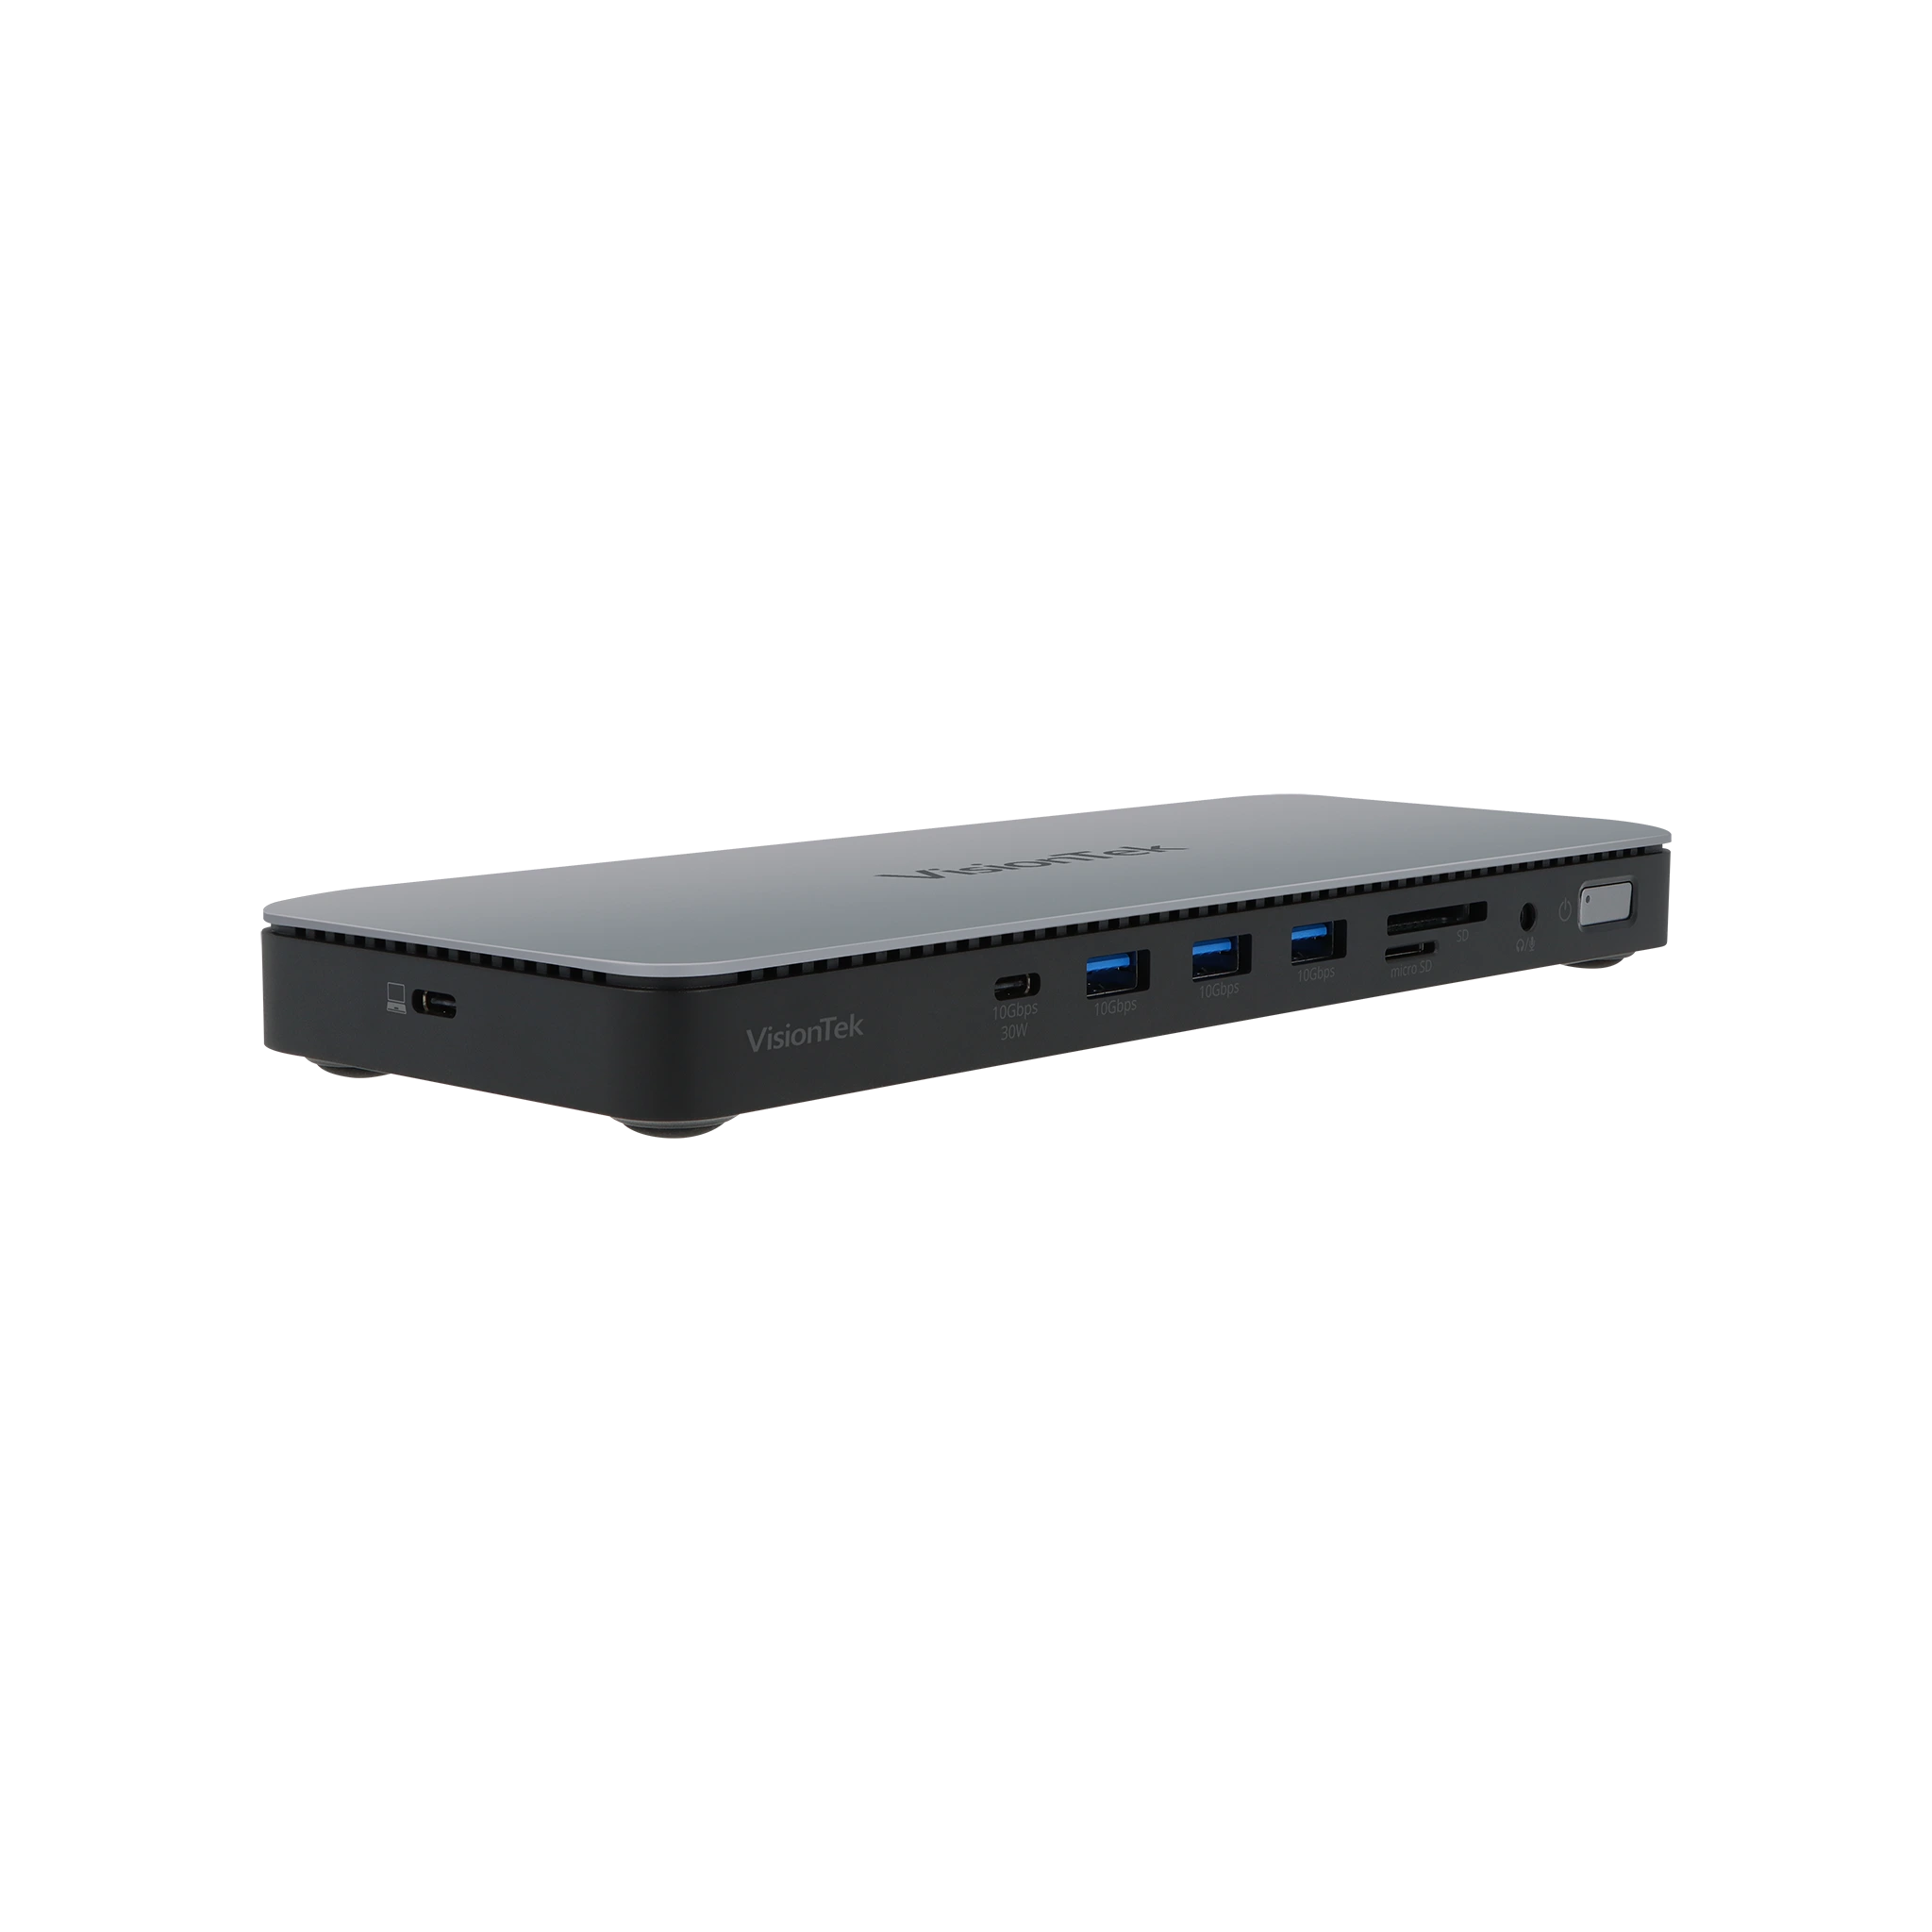 VT2600 USB-C DP 1.4 Docking Station - Multi Display MST Dock 100W Power Delivery